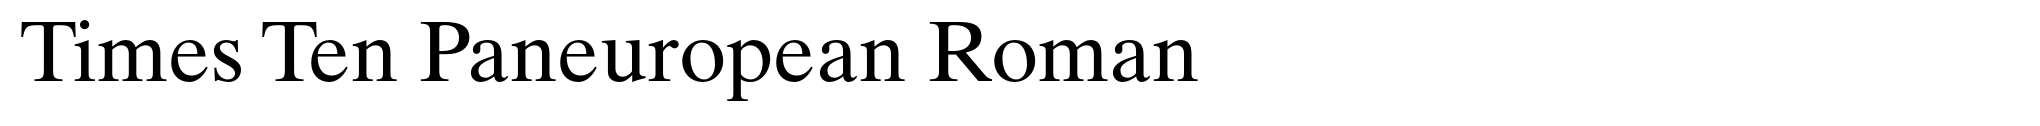 Times Ten Paneuropean Roman image